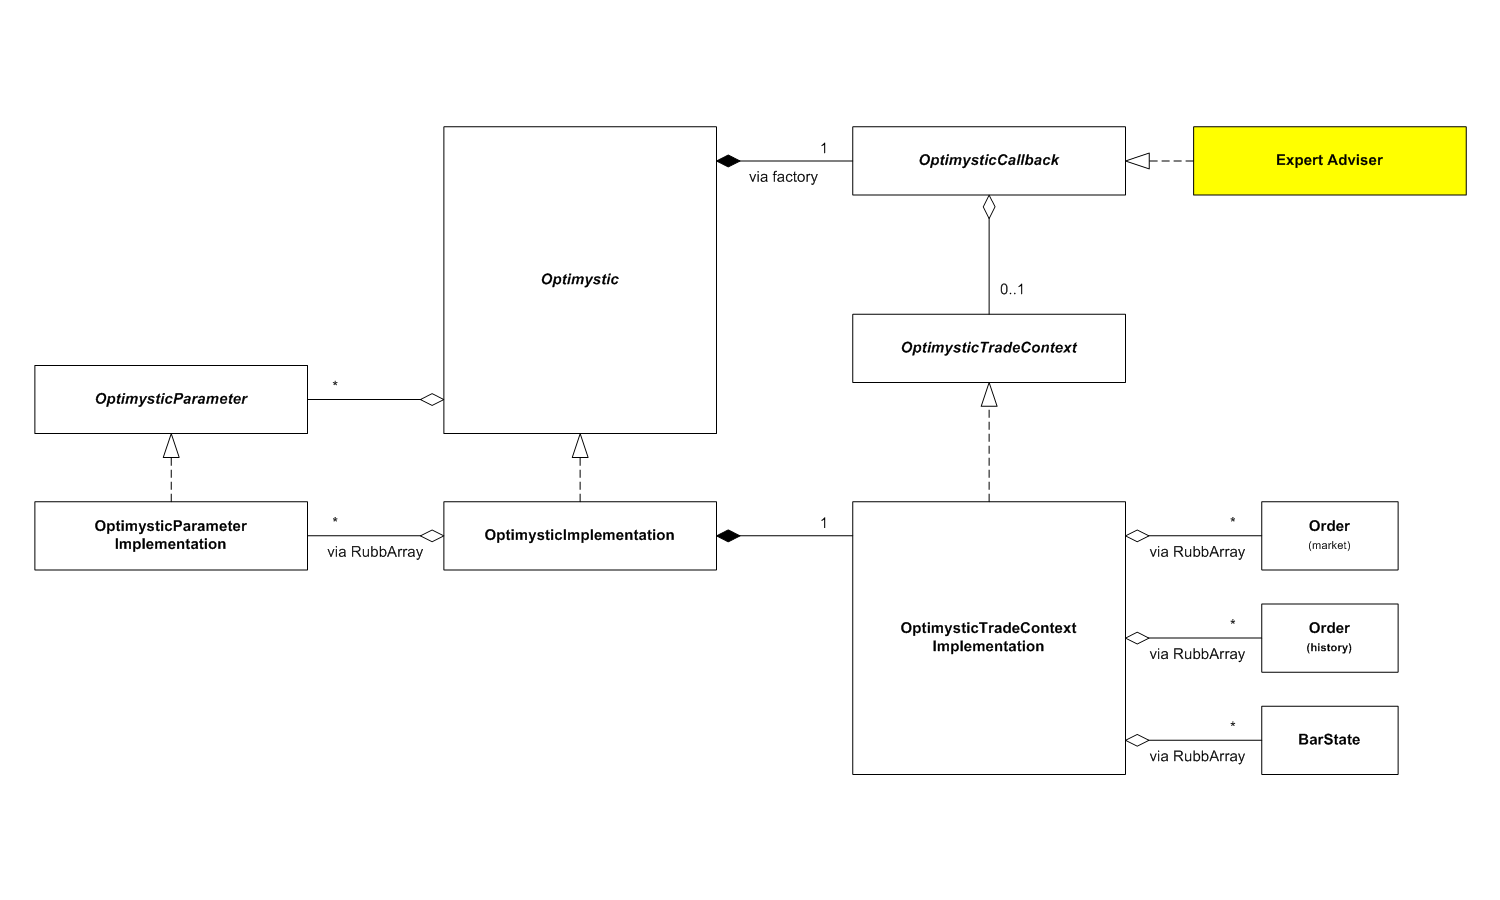 MetaTrader 4 expert adviser on the fly optimization: Optimystic library class diagram